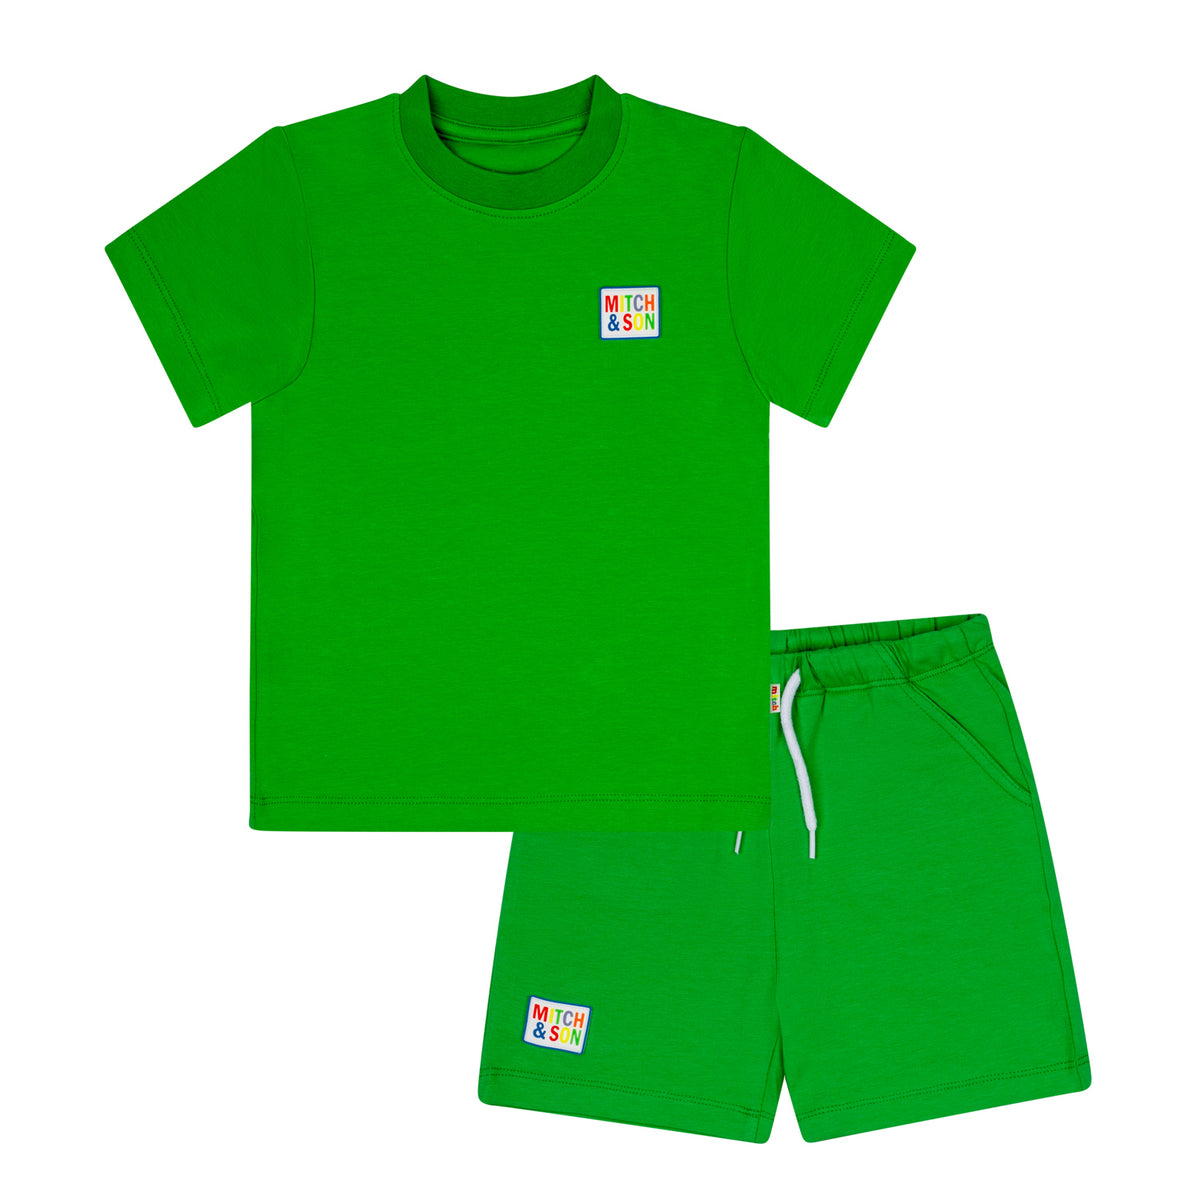 Mitch & Son Boys 'Verge' Green Shorts Set